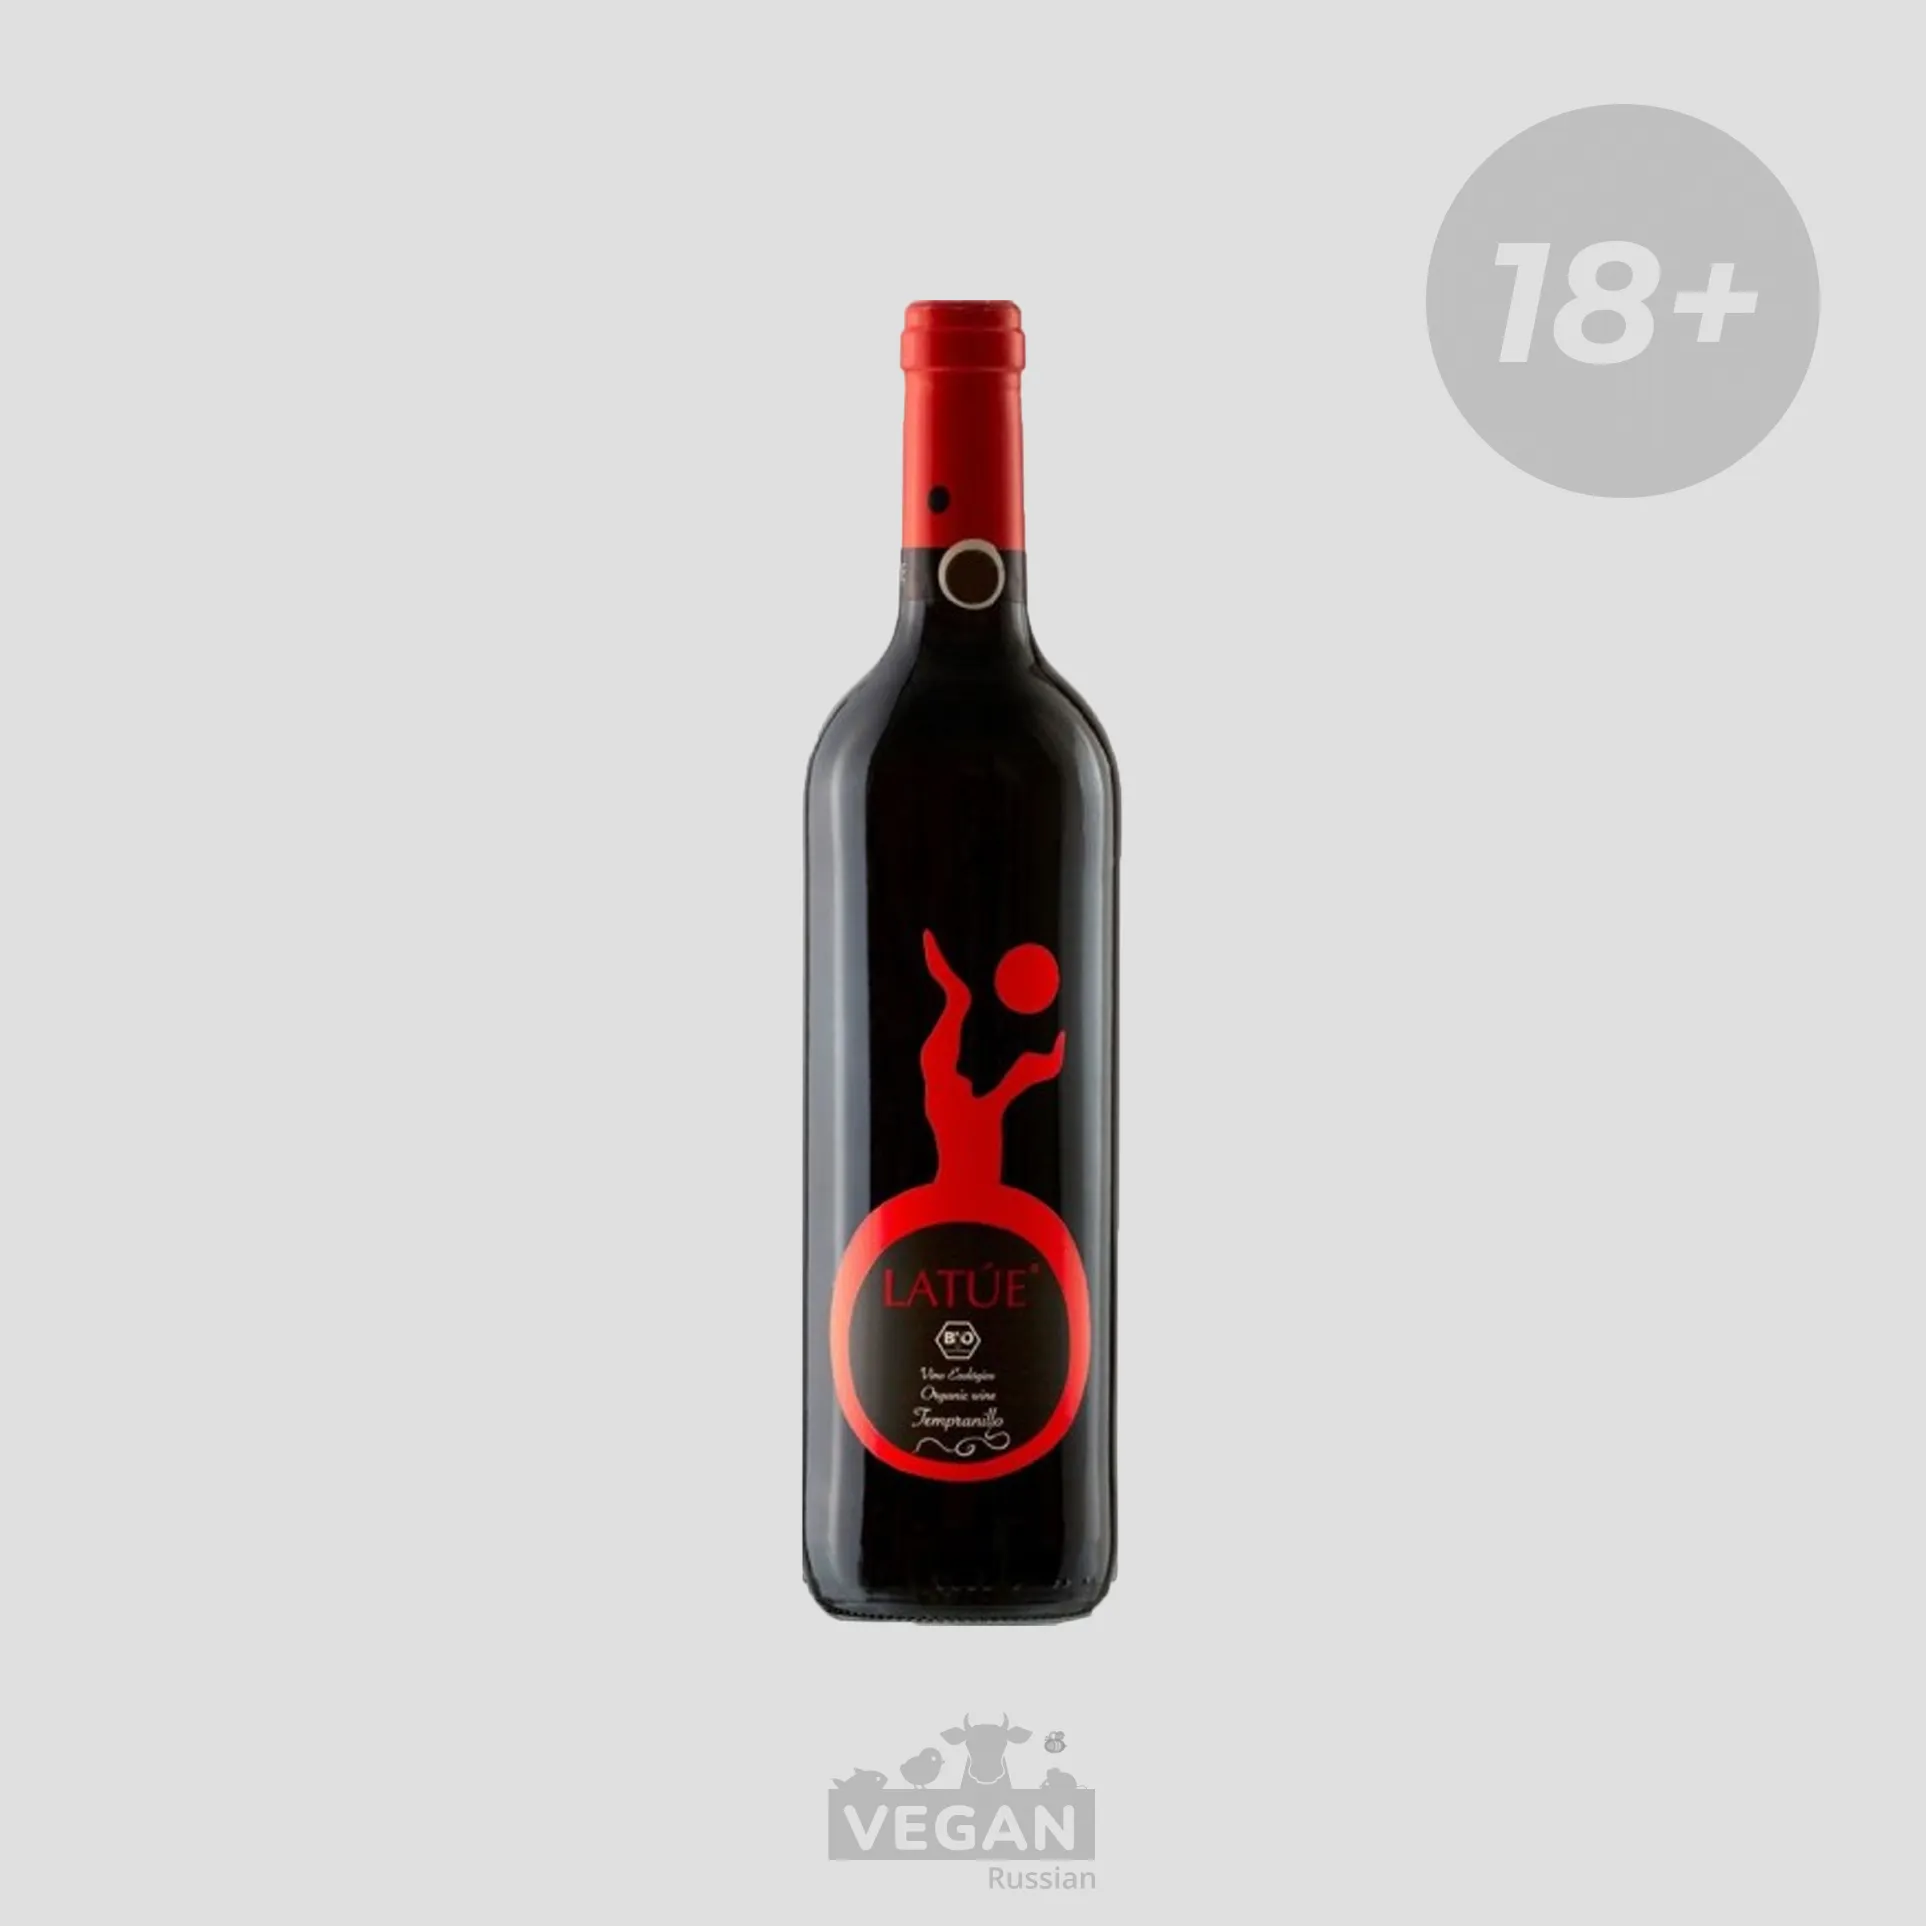 Вино Latue 0,75 л